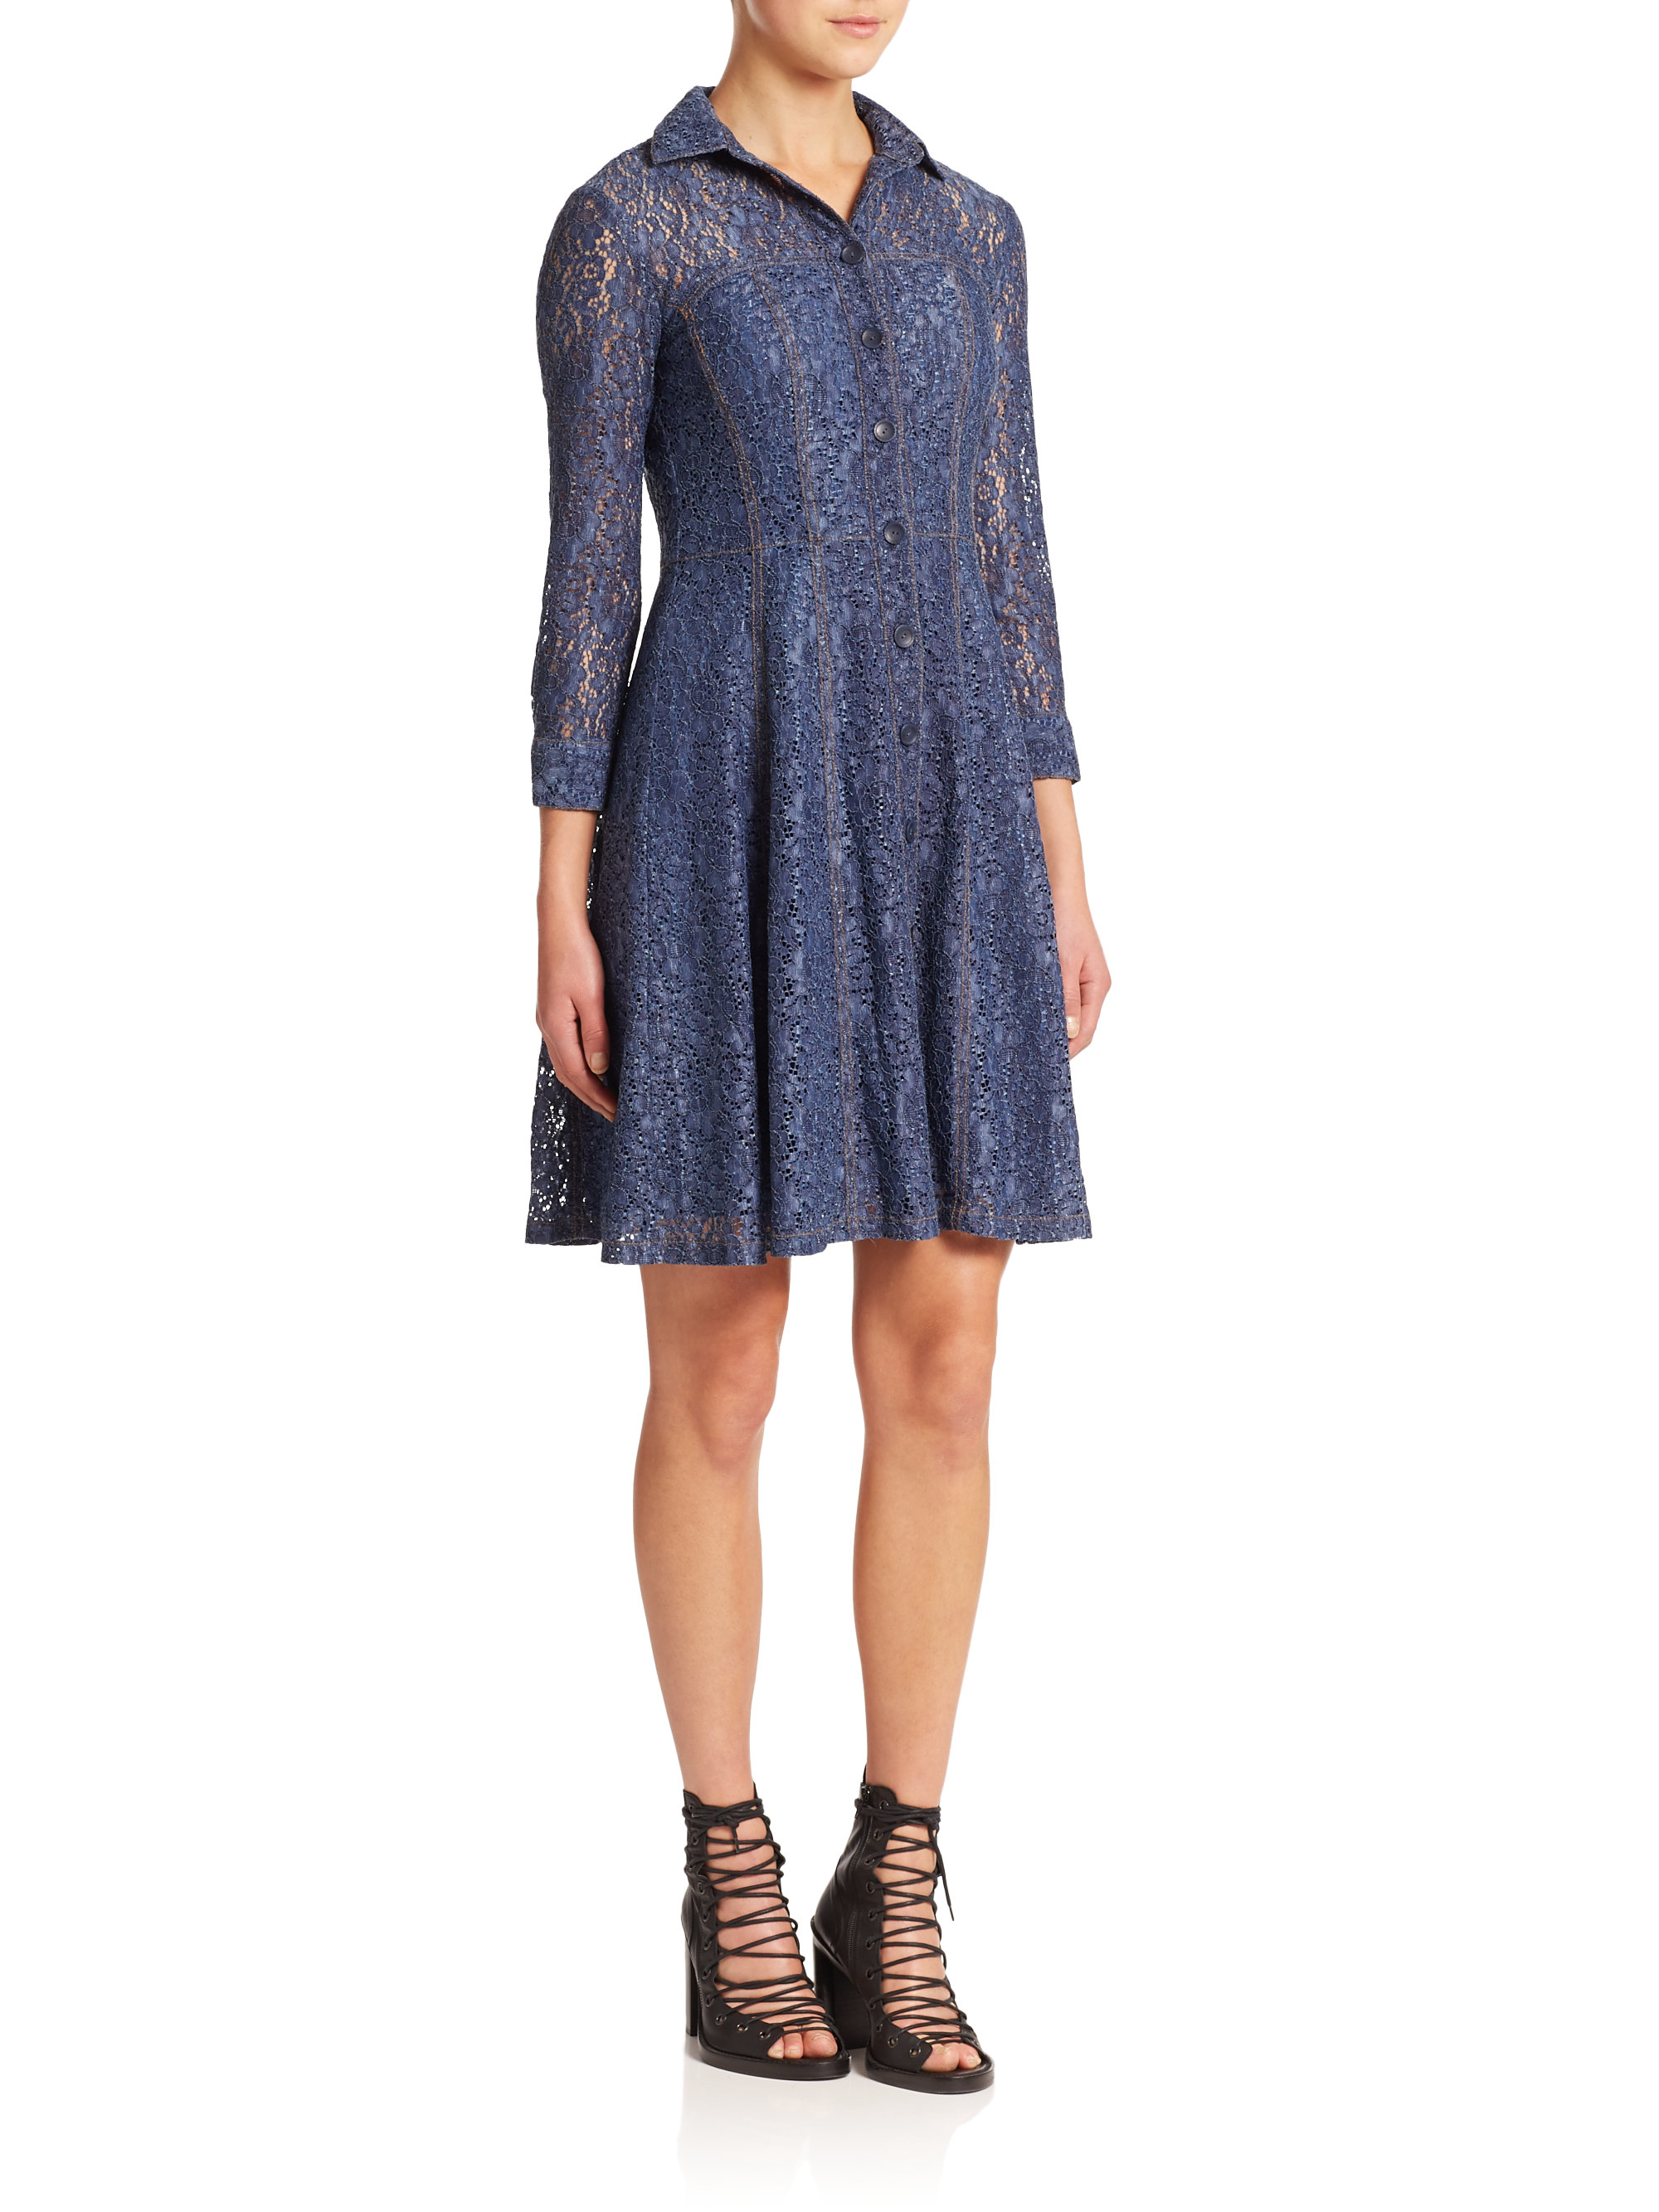 Lyst - Nanette Lepore Lace Fever Denim Dress in Blue